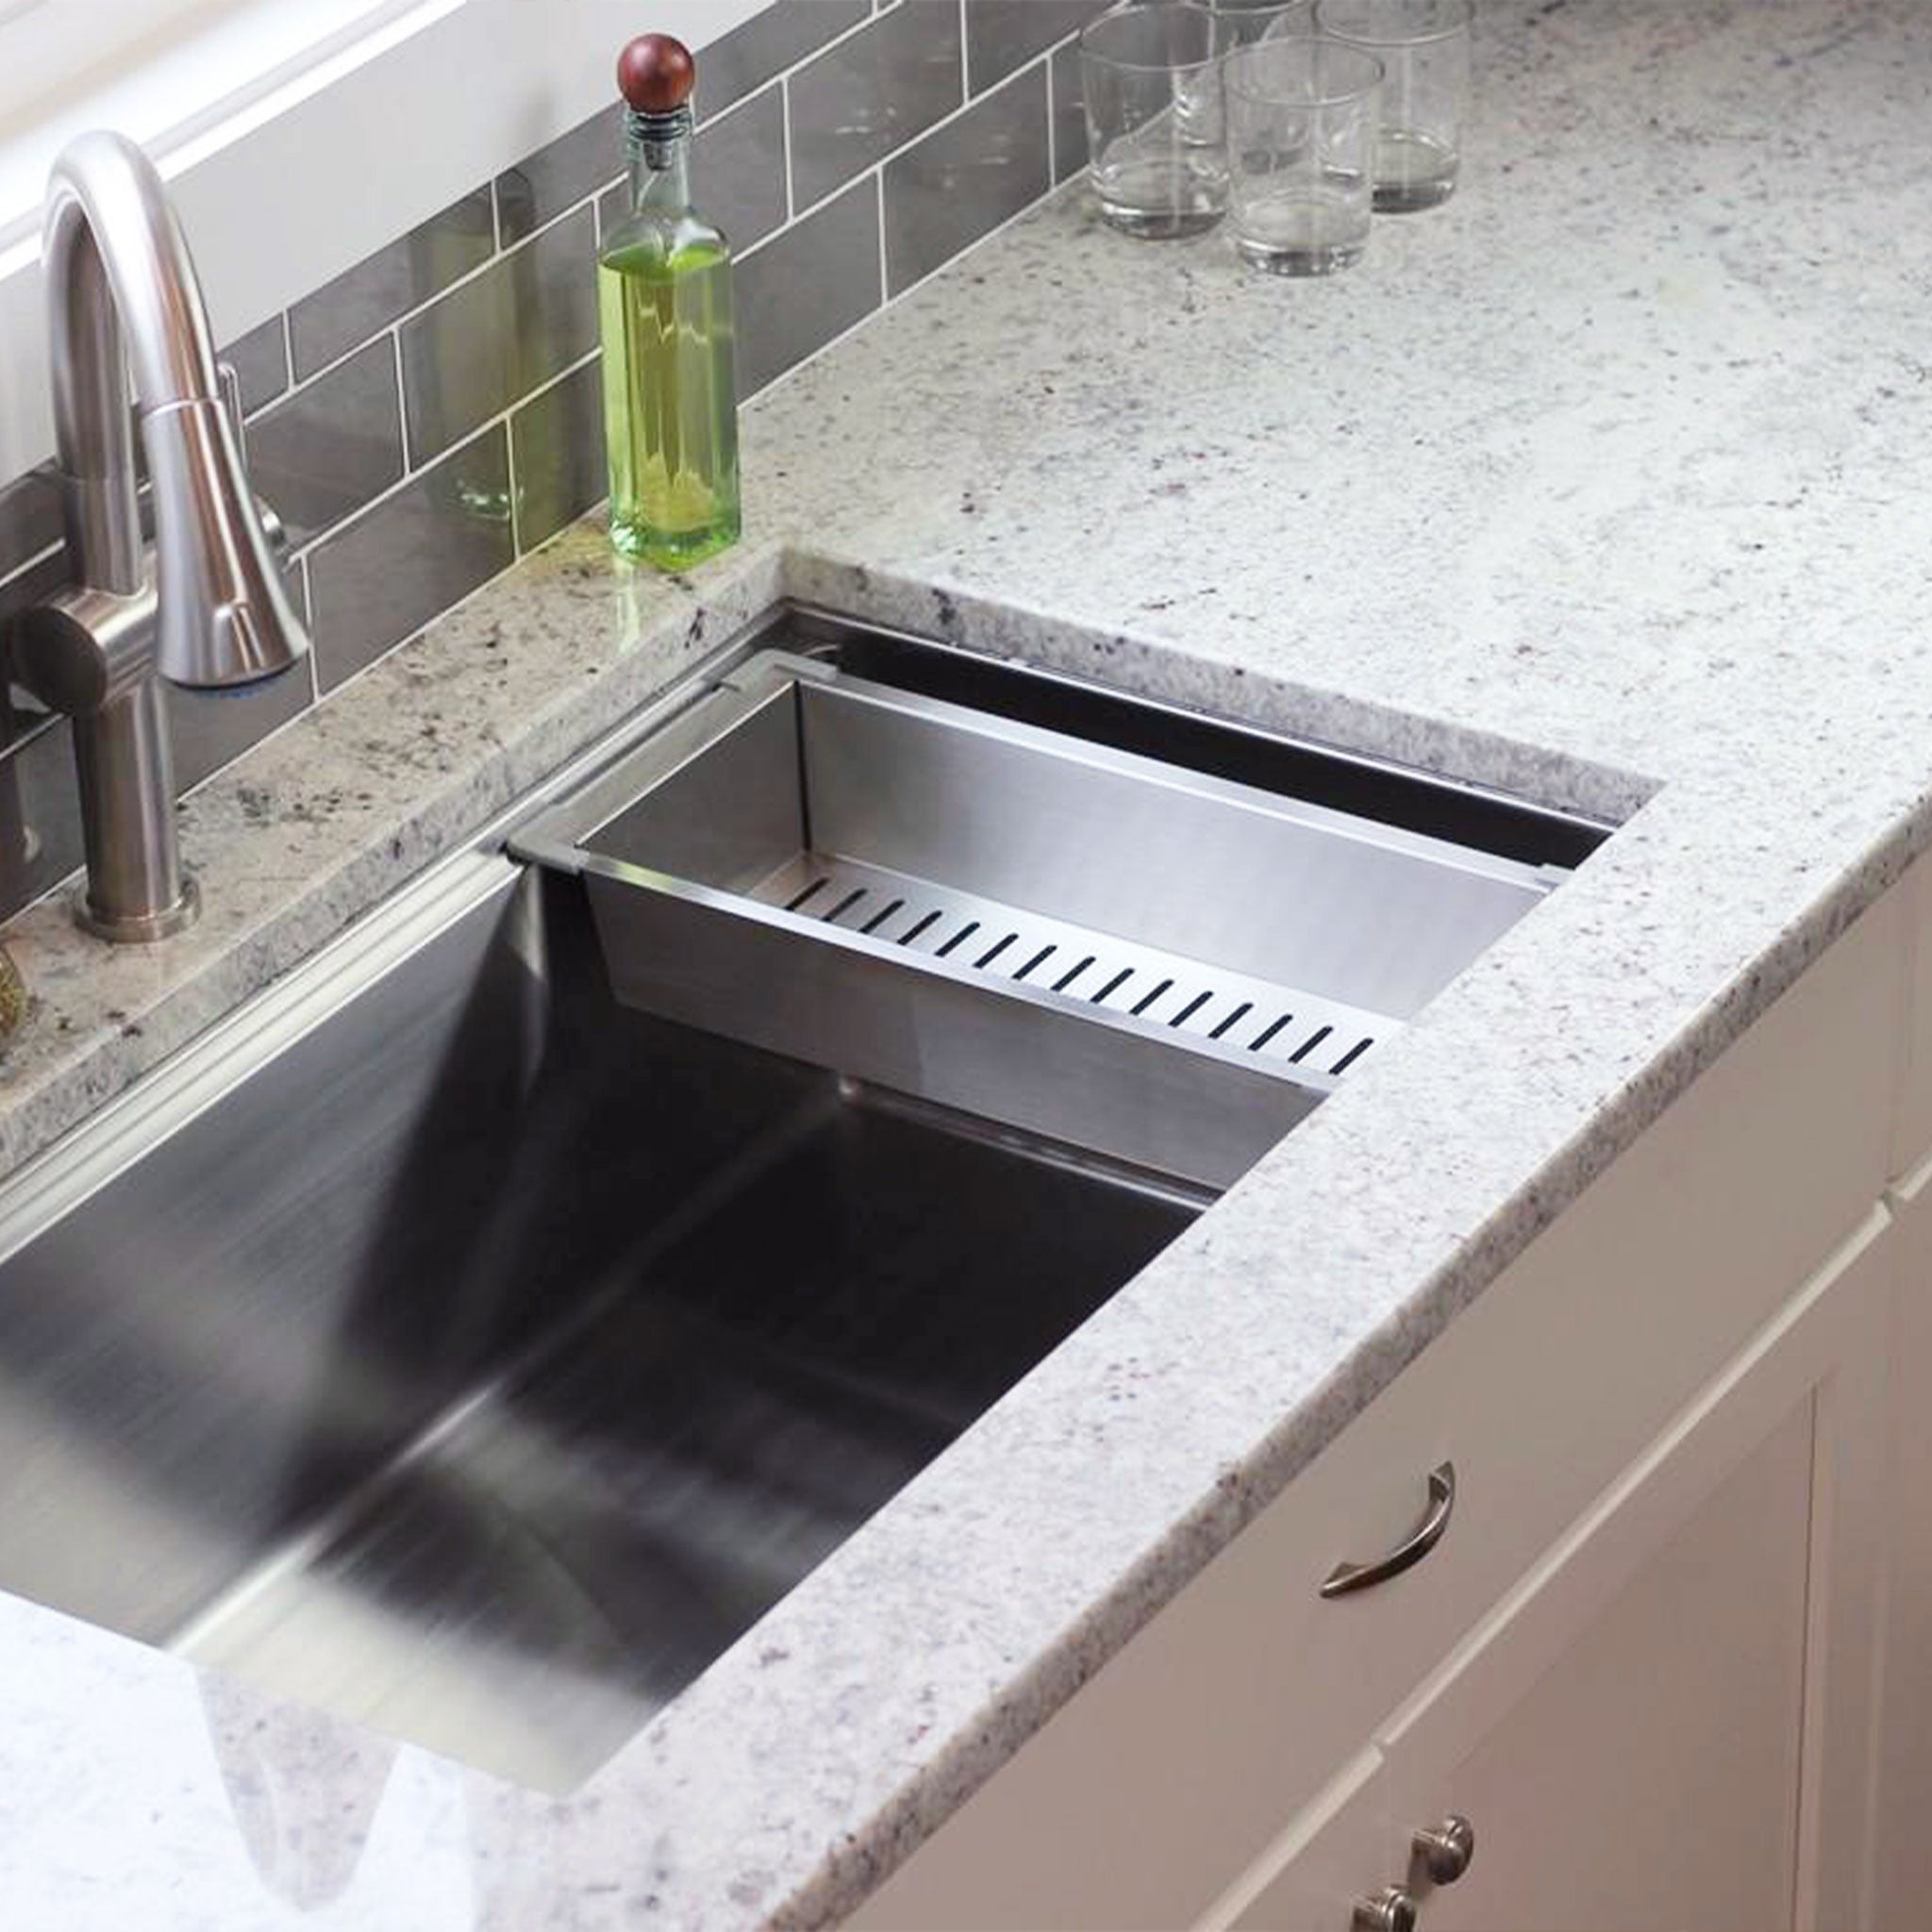 Stainless steel colander accessory for workstation kitchen sink